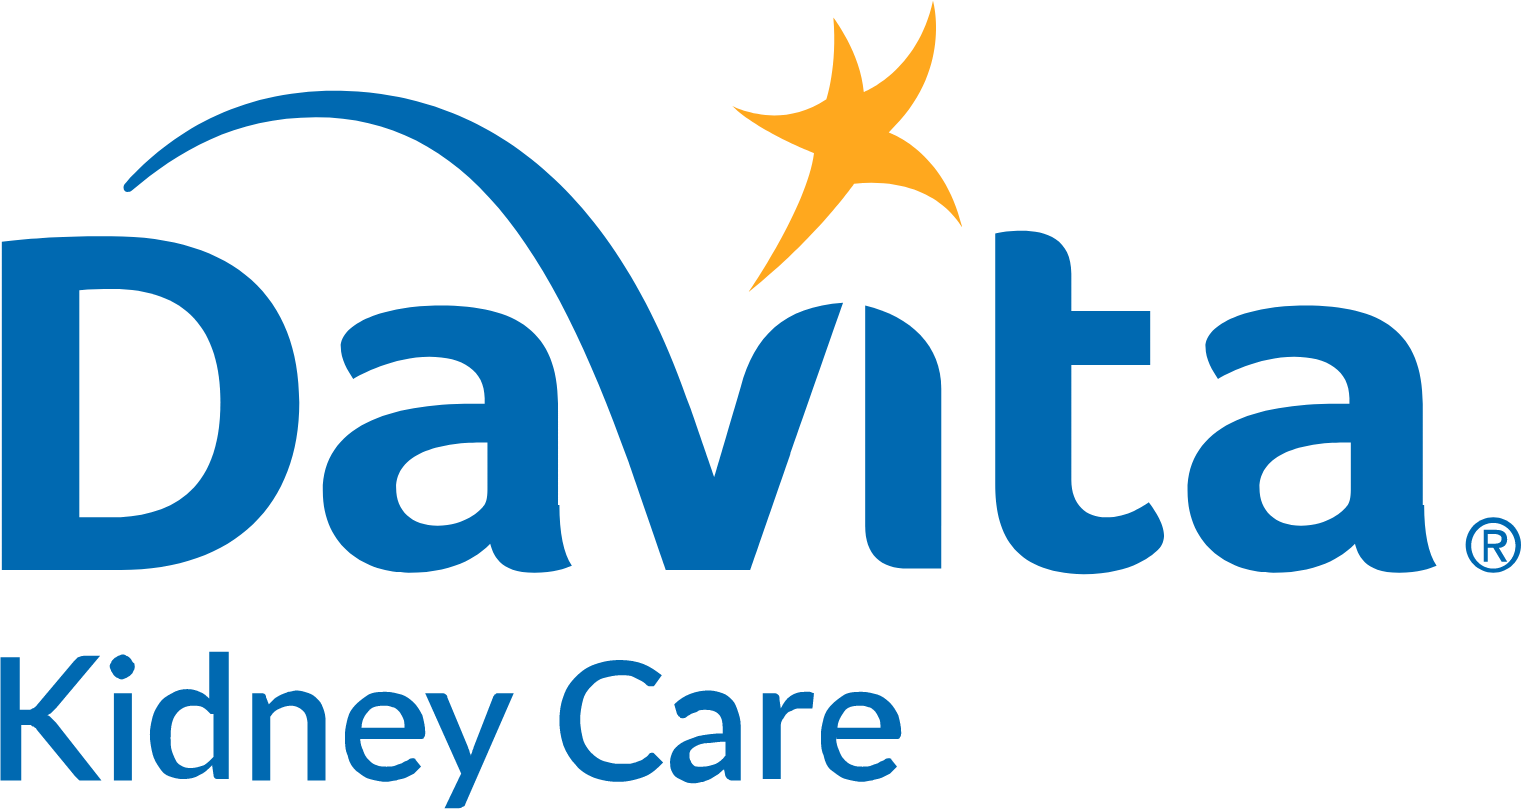 DaVita logo large (transparent PNG)